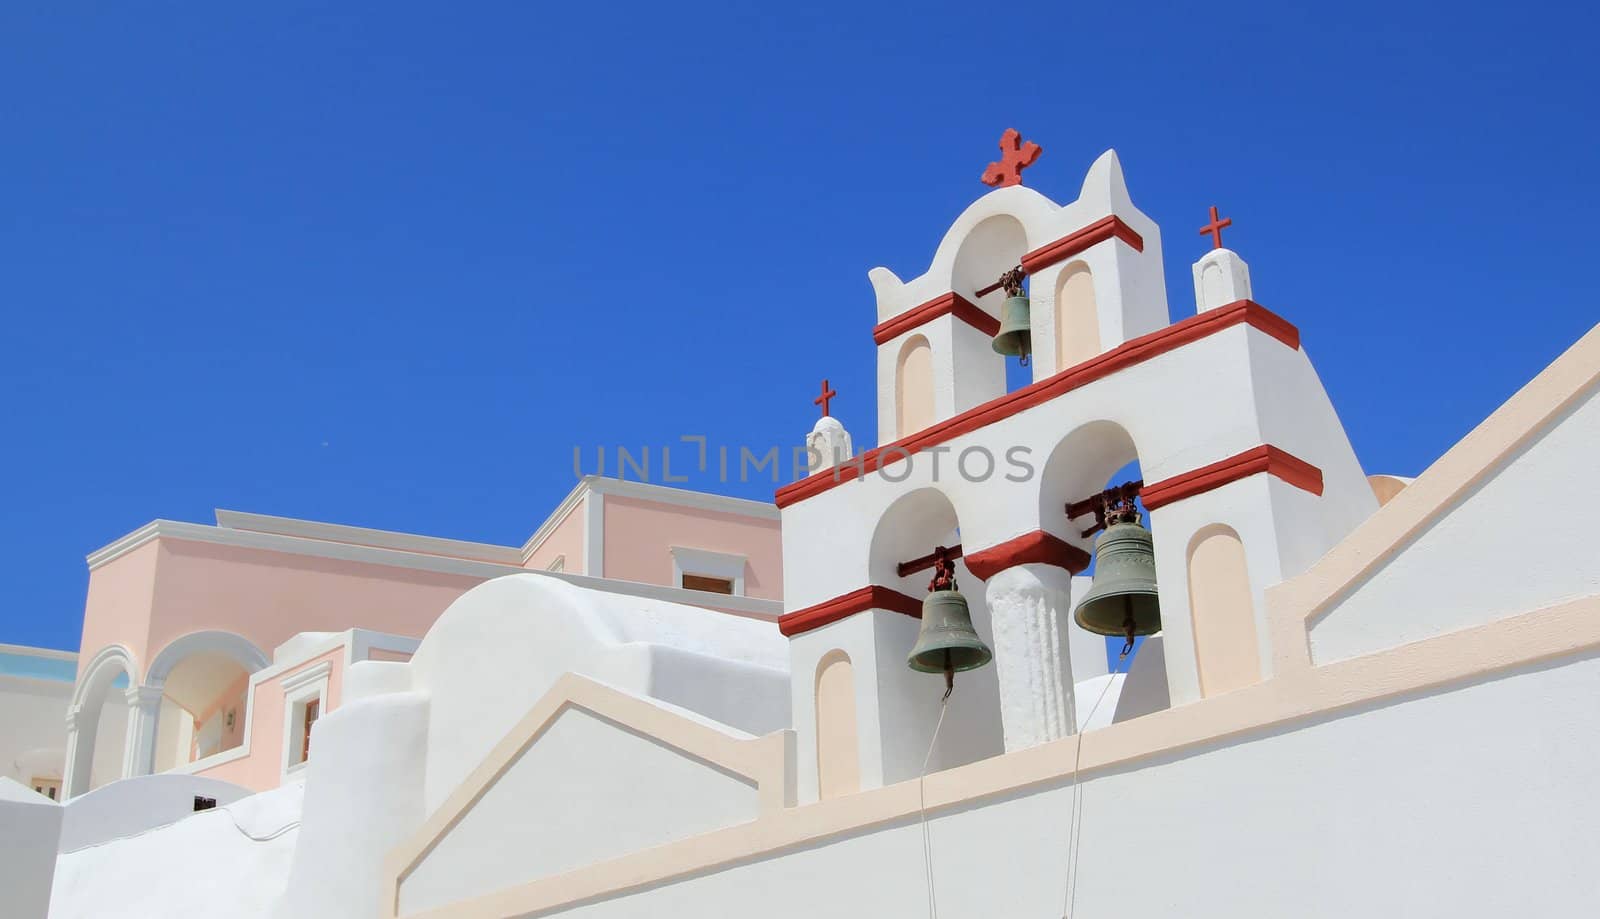 Belfry of a typical greek church, Oia, Santorini, Greece by Elenaphotos21